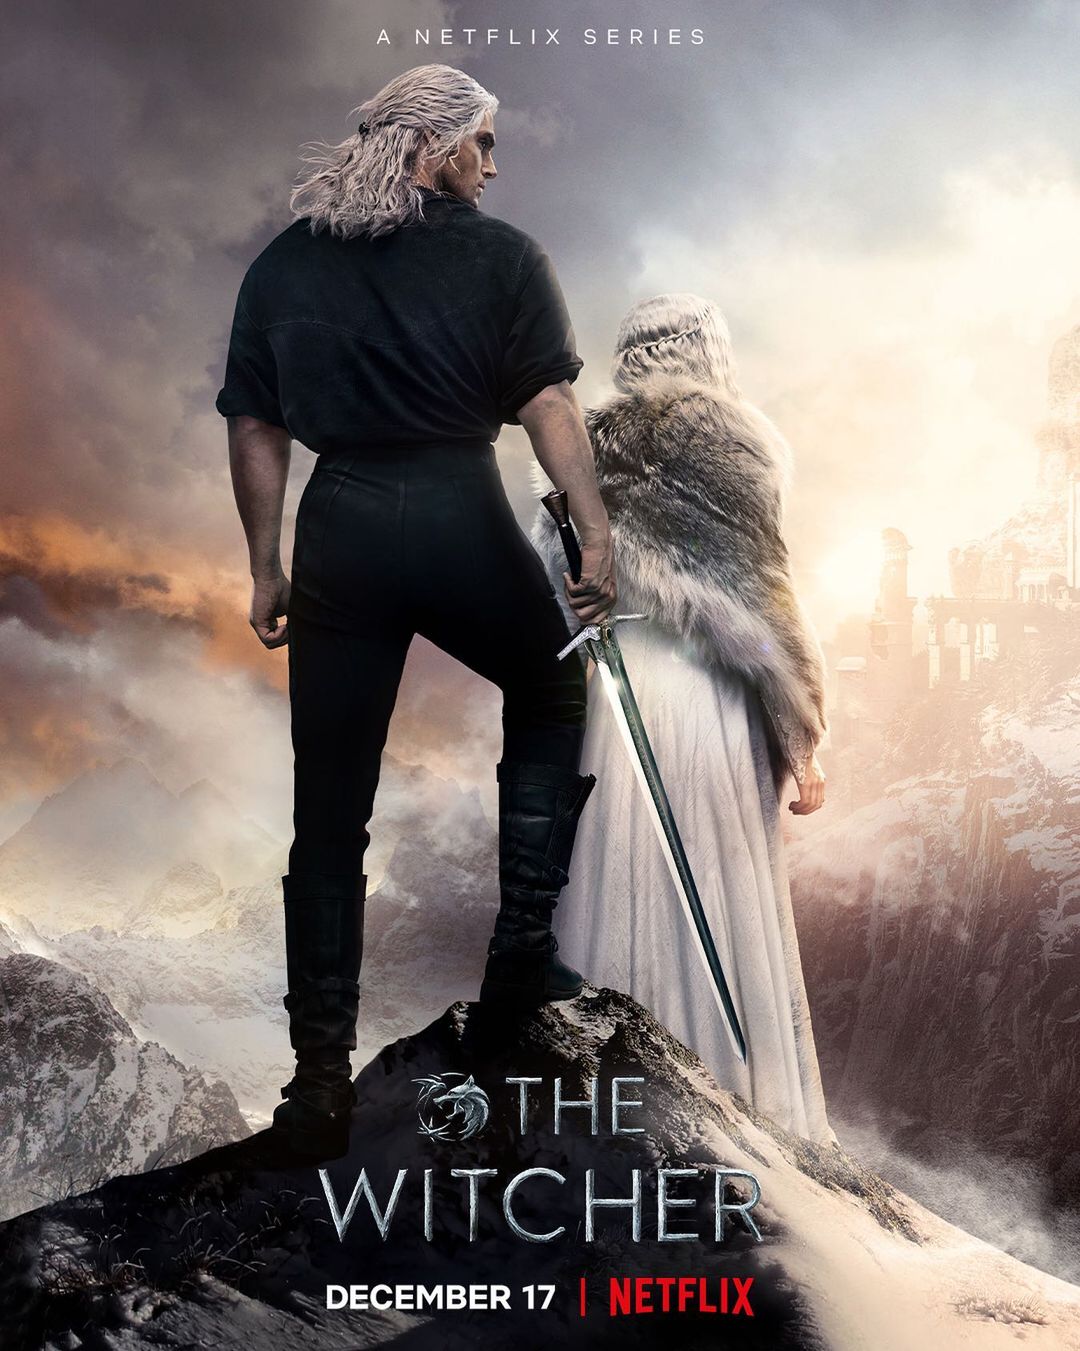 The Witcher เดอะ วิทเชอร์ นักล่าจอมอสูร Season 2 (2021) พากย์ไทย